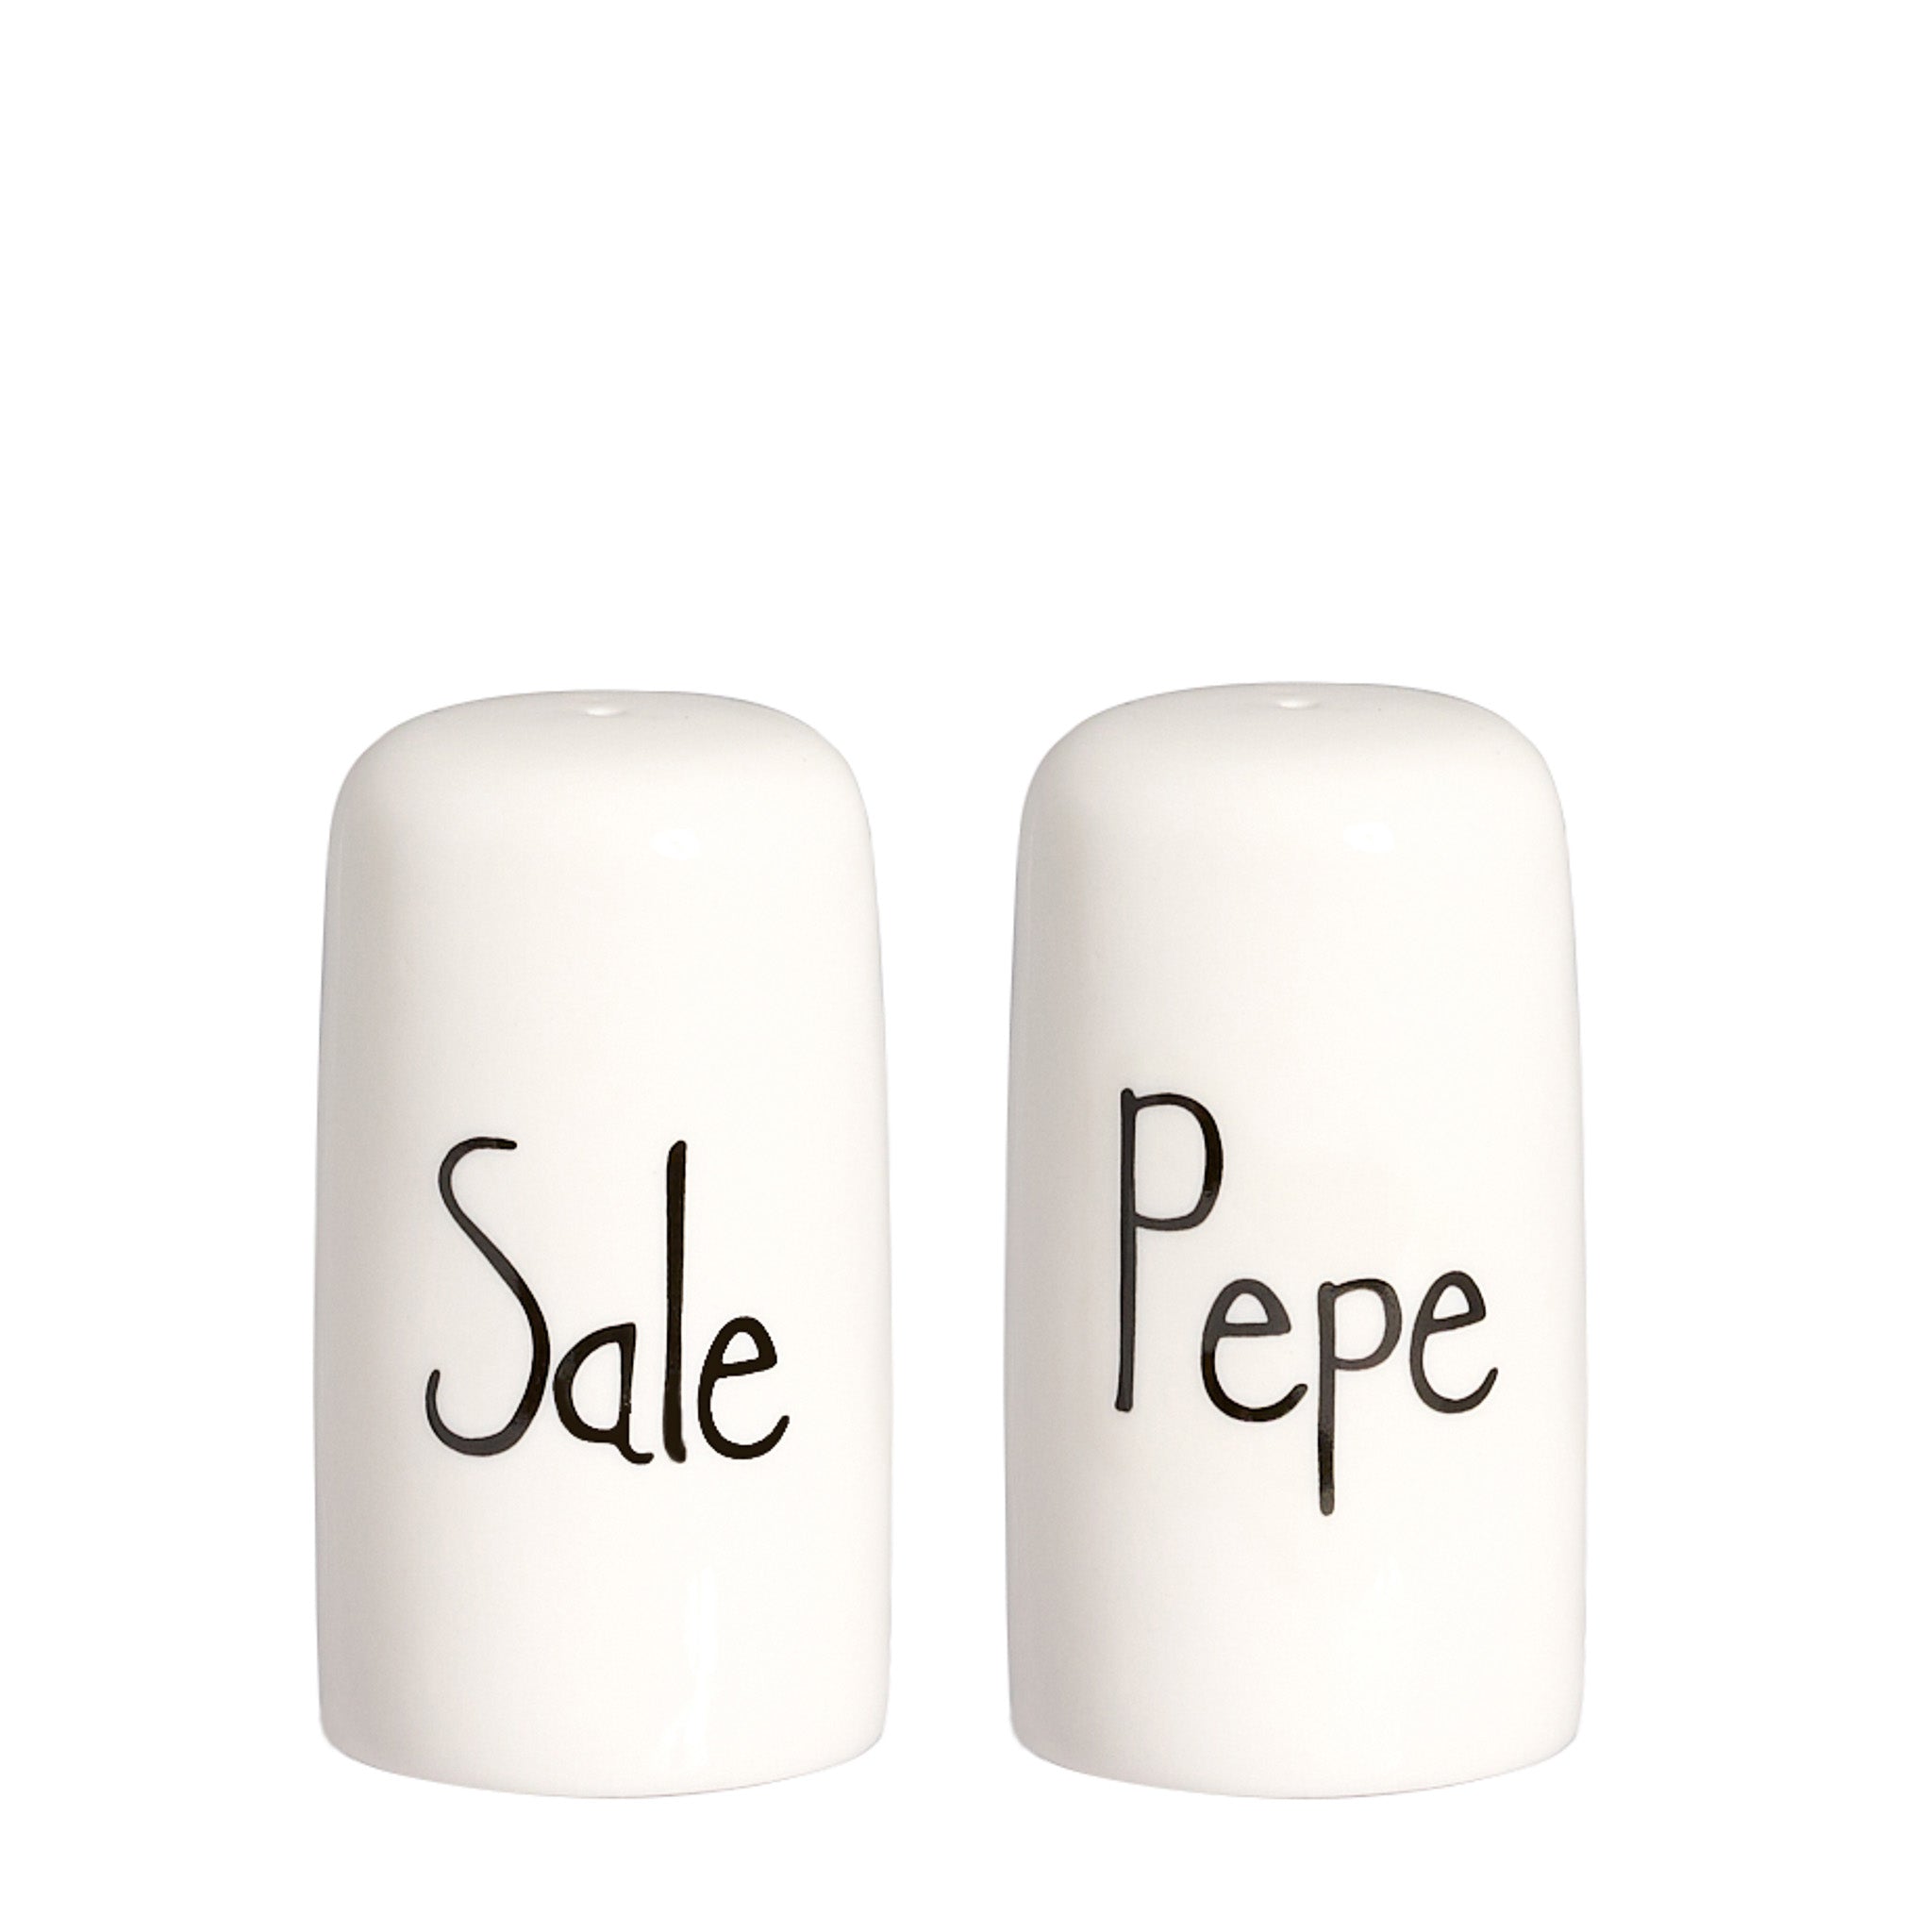 Set of salt and pepper "salt" - "pepper"